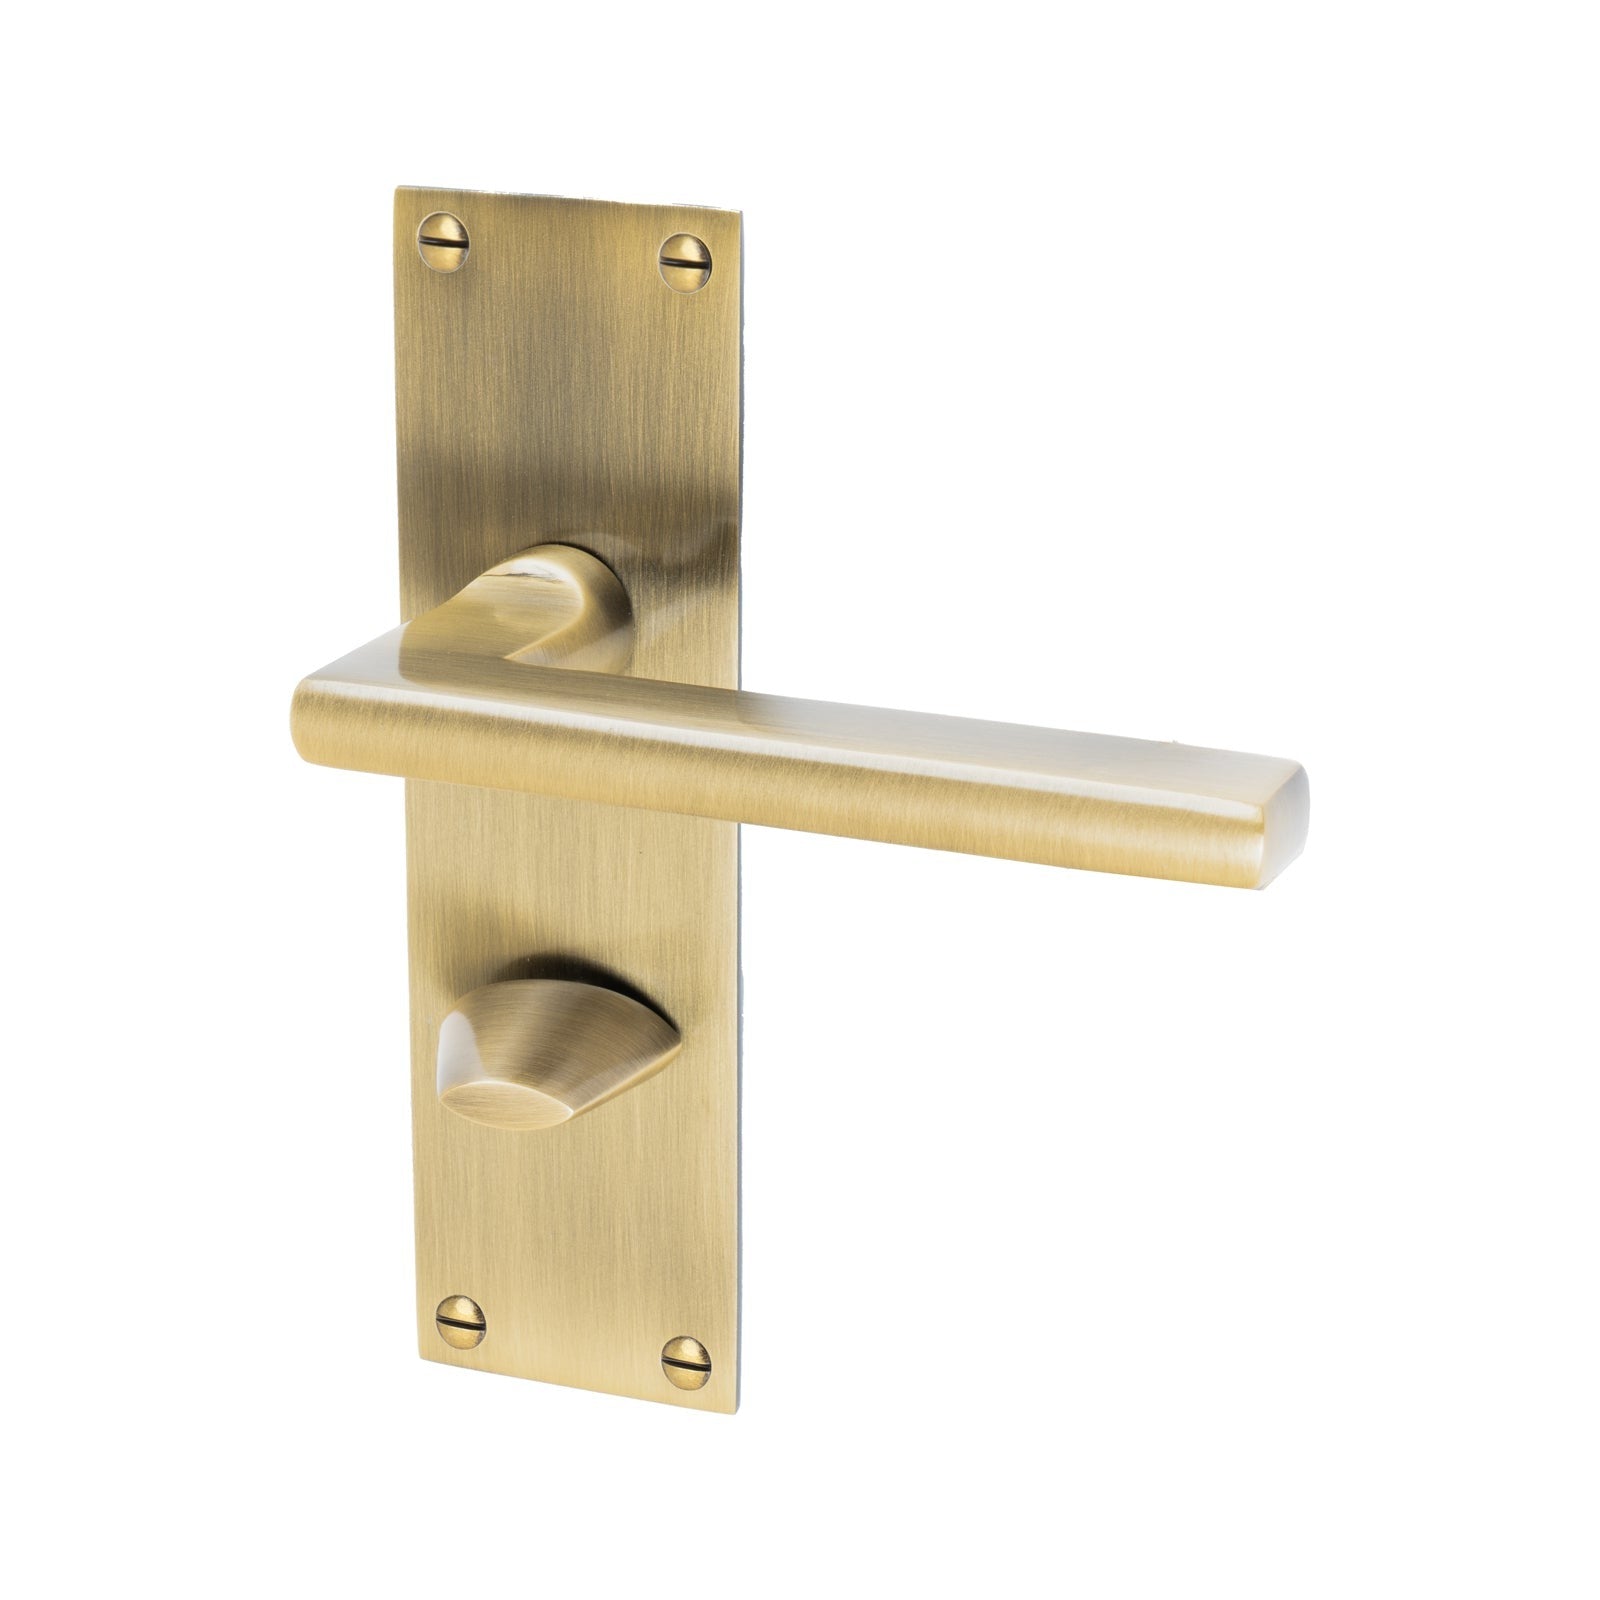 Trident Door Handles On Plate Bathroom Handle in Aged Brass